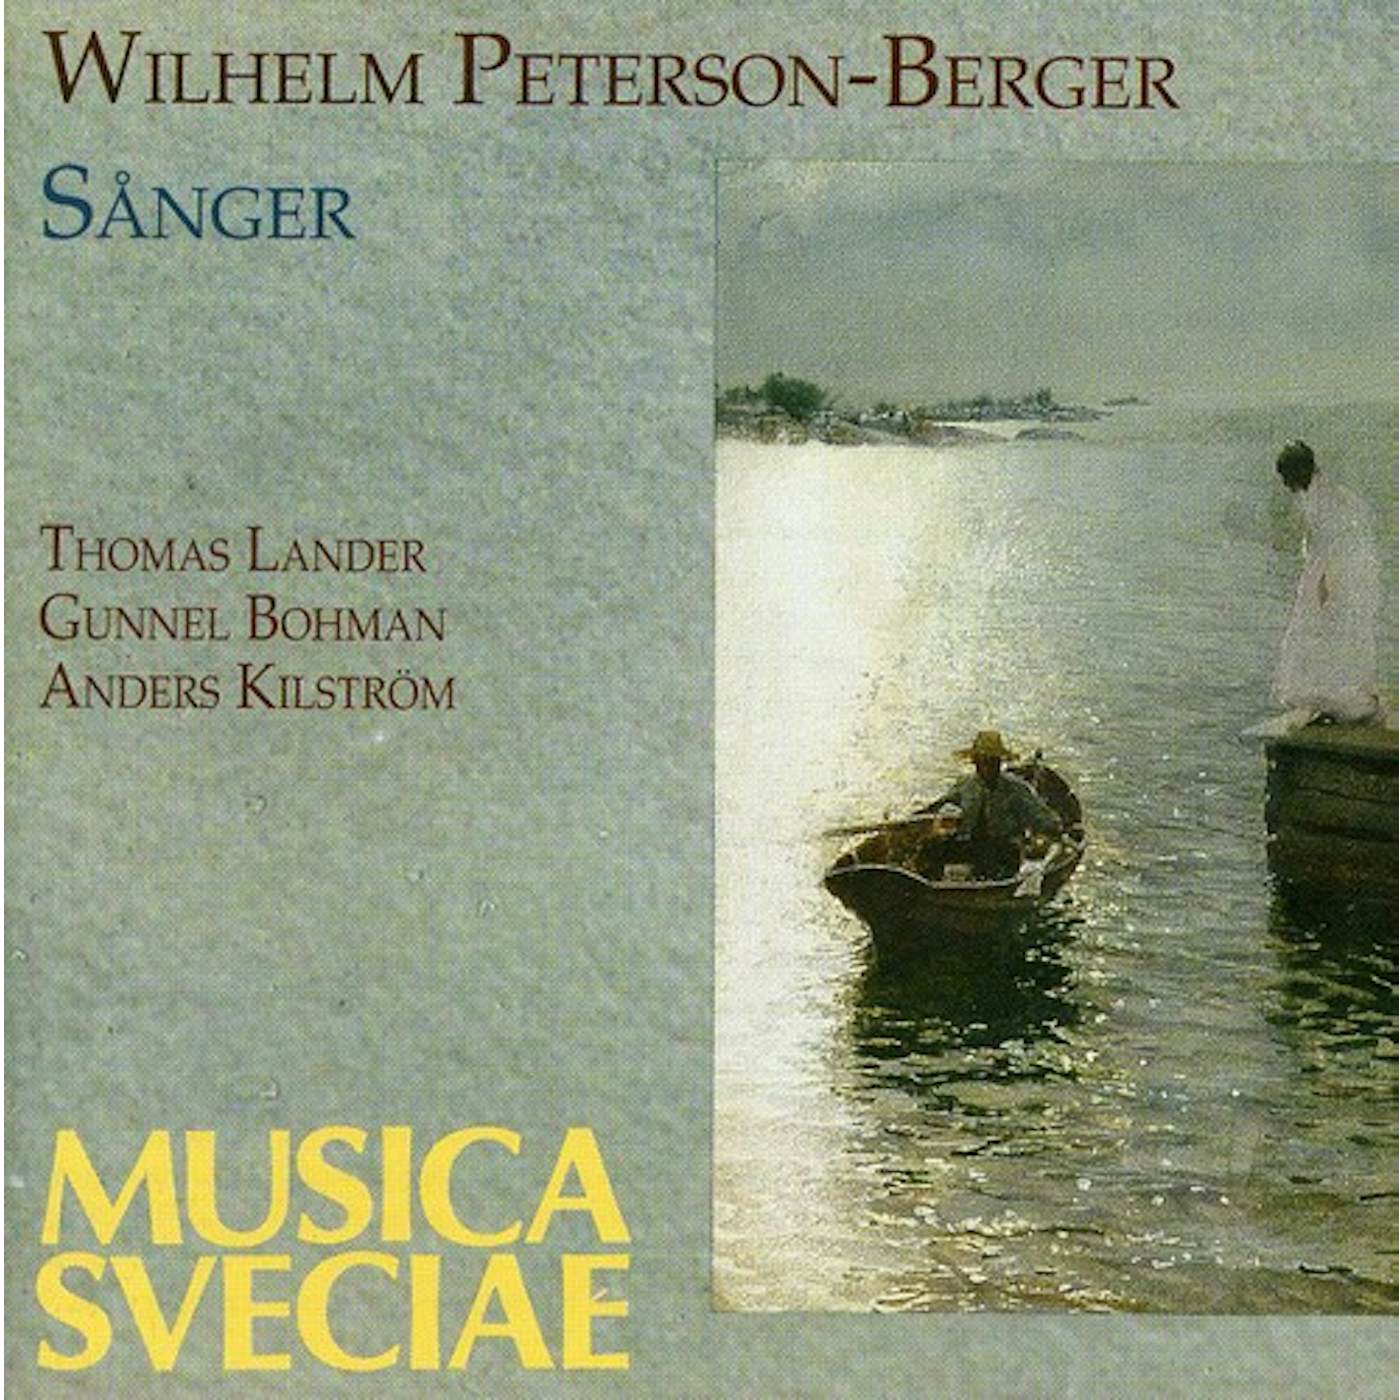 Peterson-Berger SONGS CD